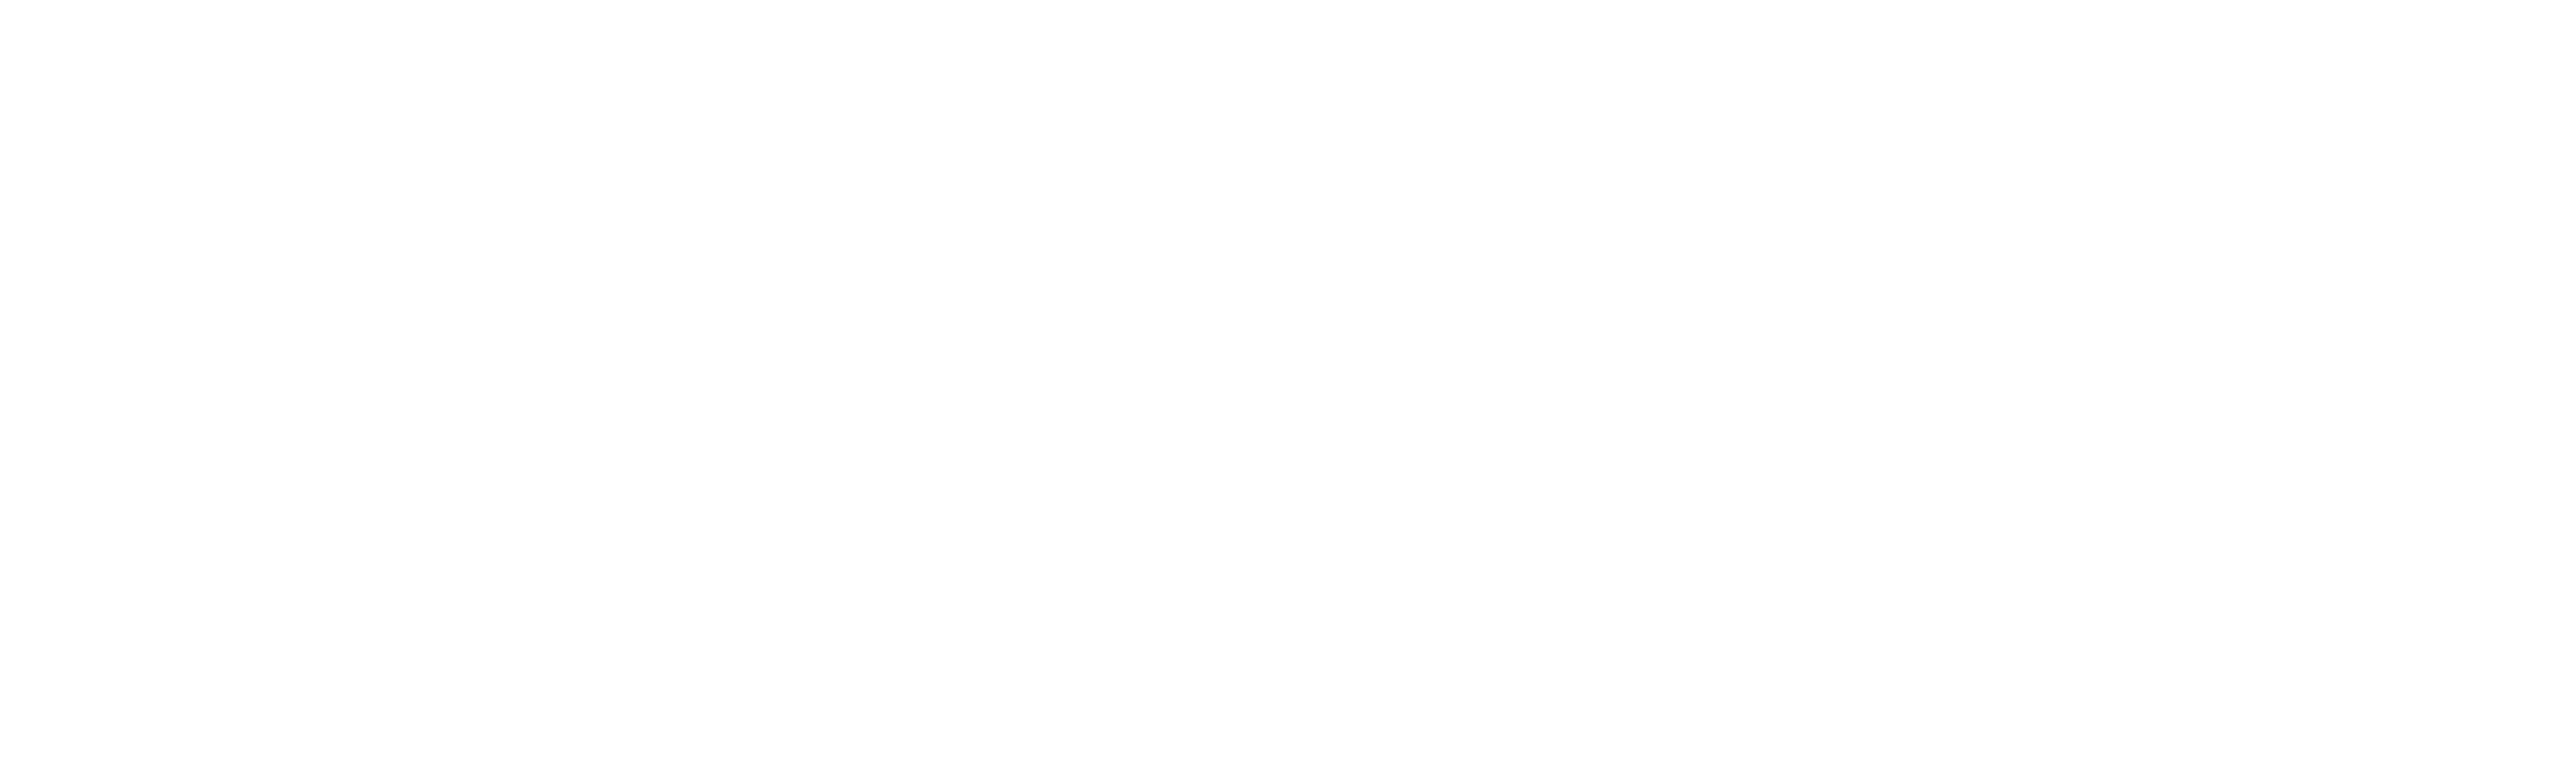 Elnet Group Plc.